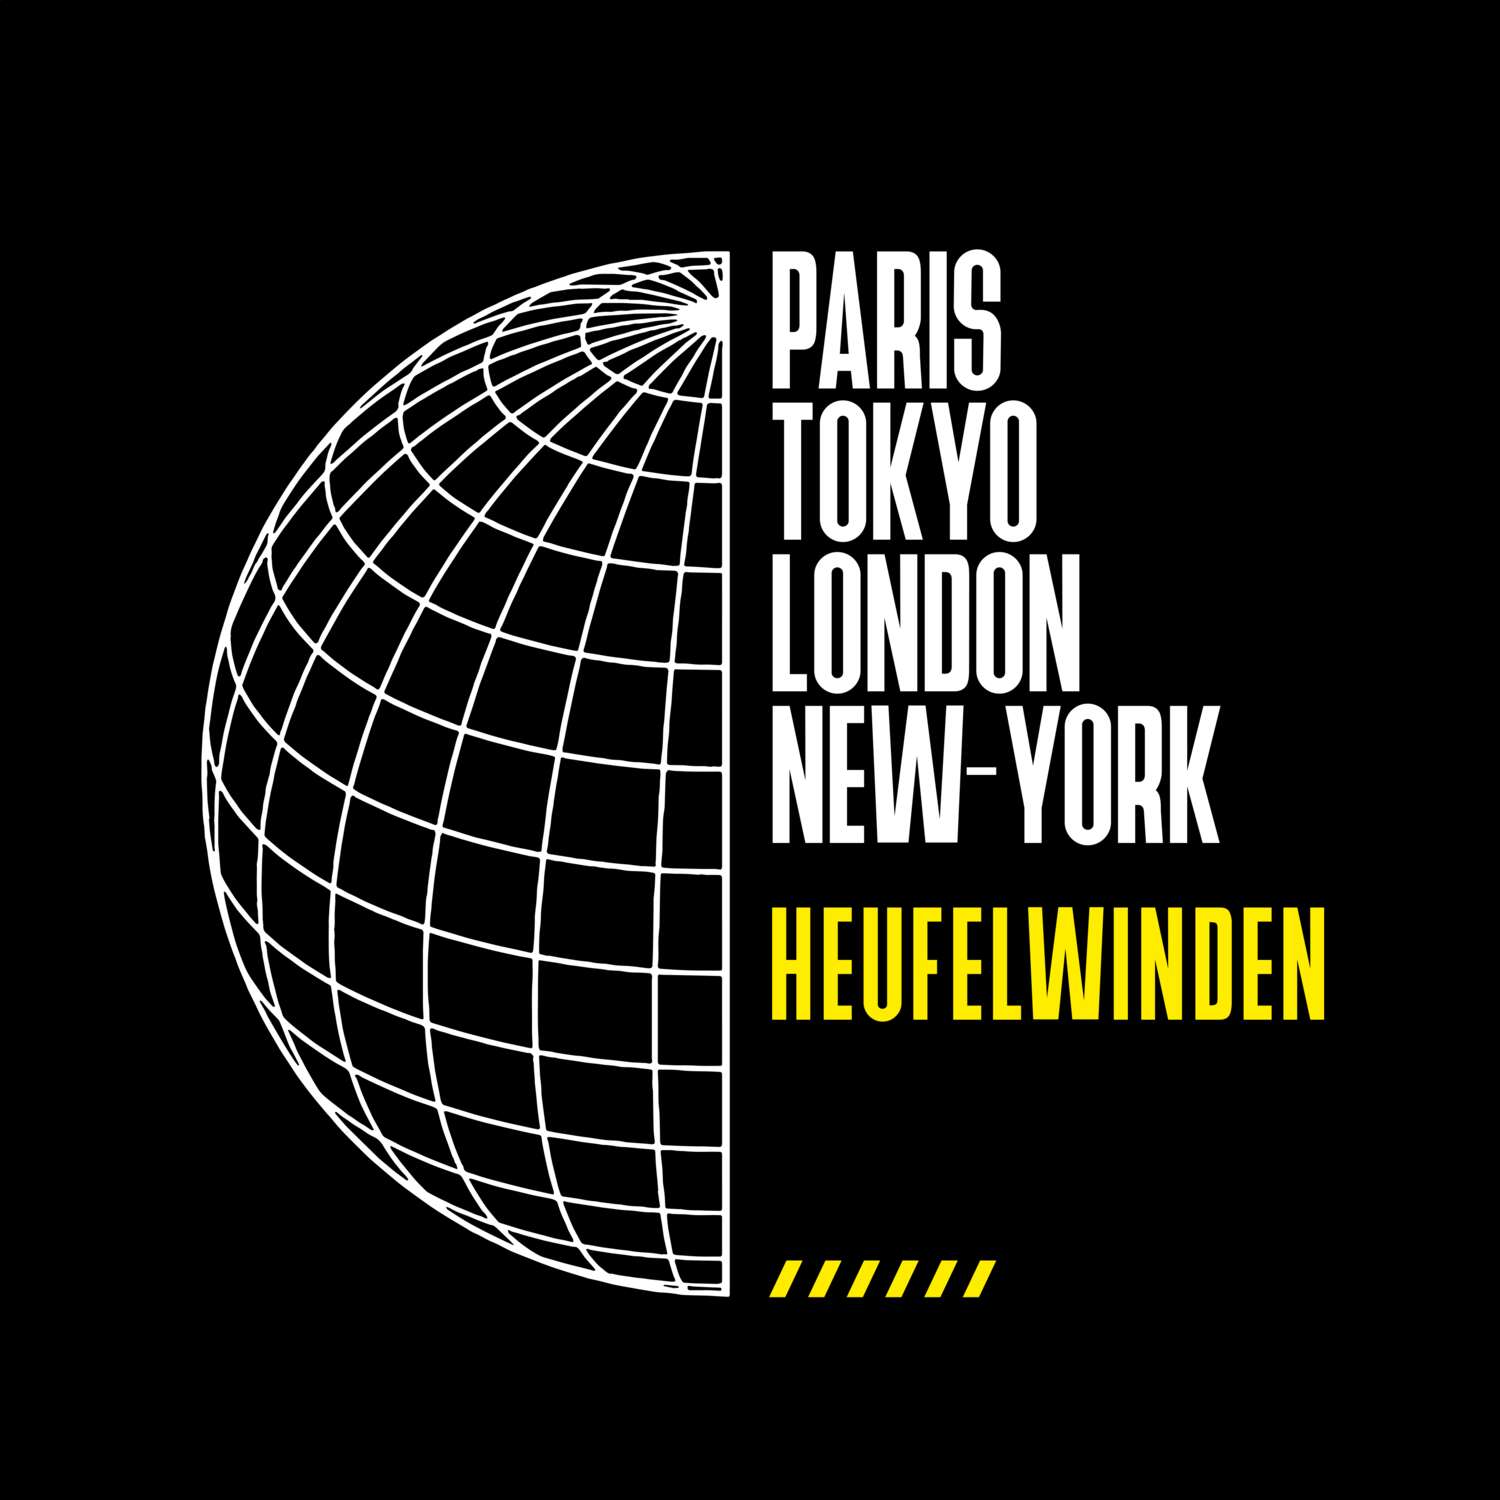 Heufelwinden T-Shirt »Paris Tokyo London«